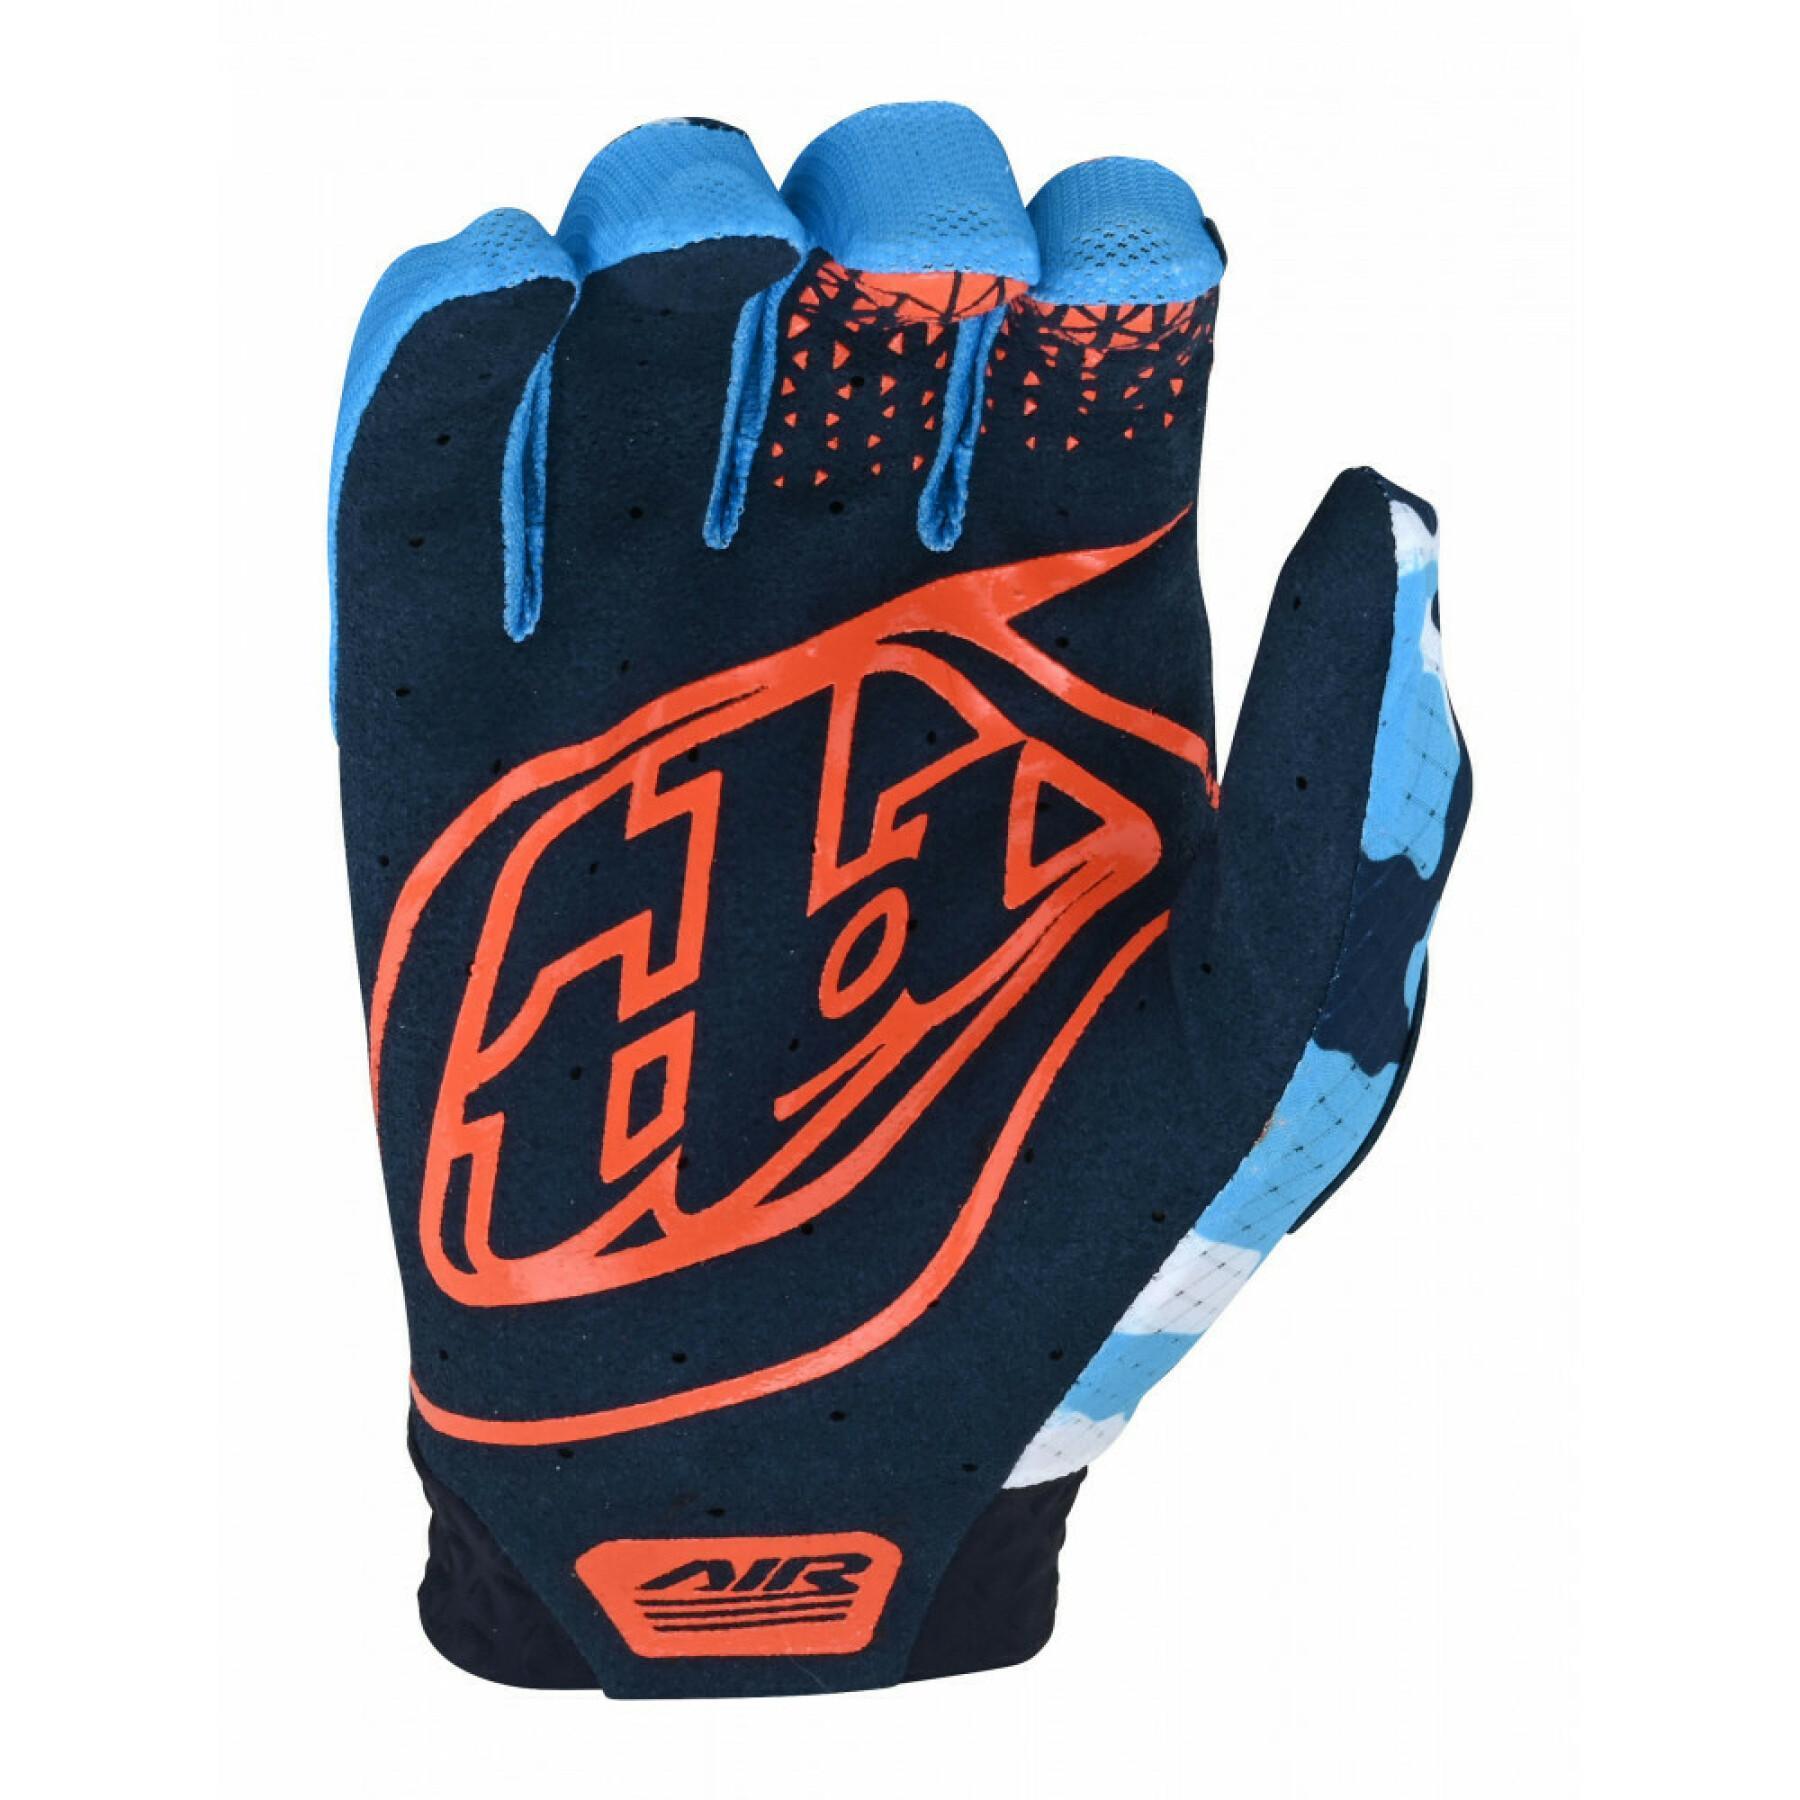 Motocross-Handschuhe Troy Lee Designs Air formula